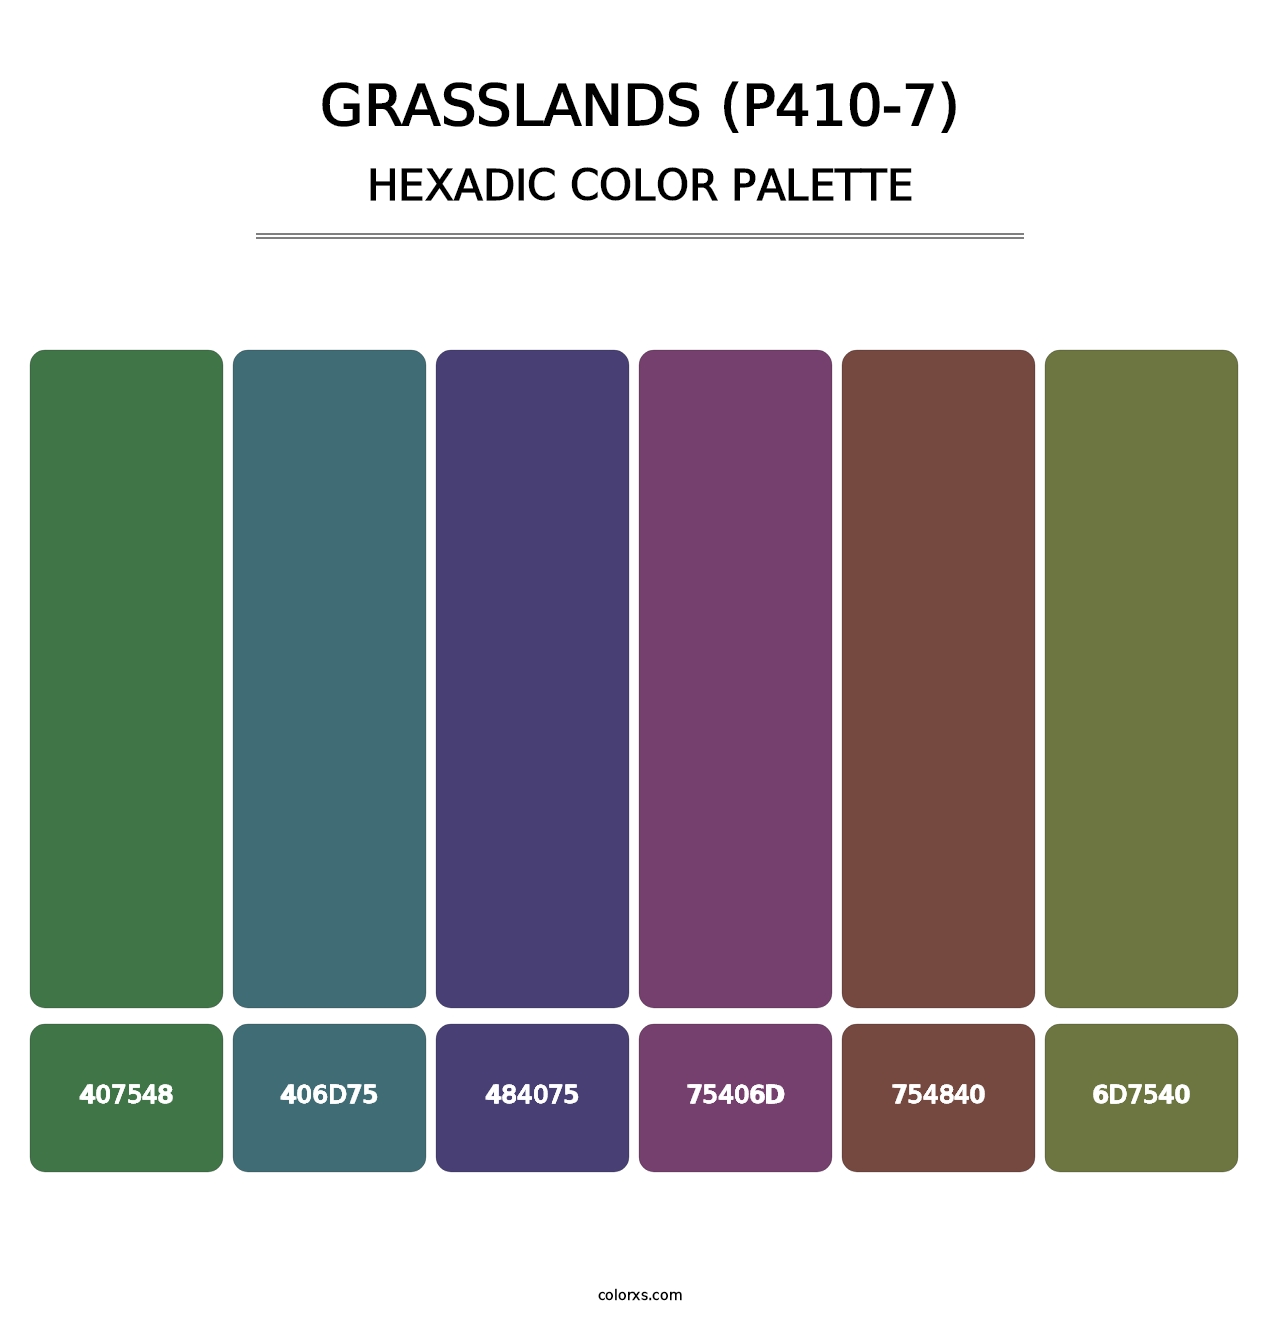 Grasslands (P410-7) - Hexadic Color Palette